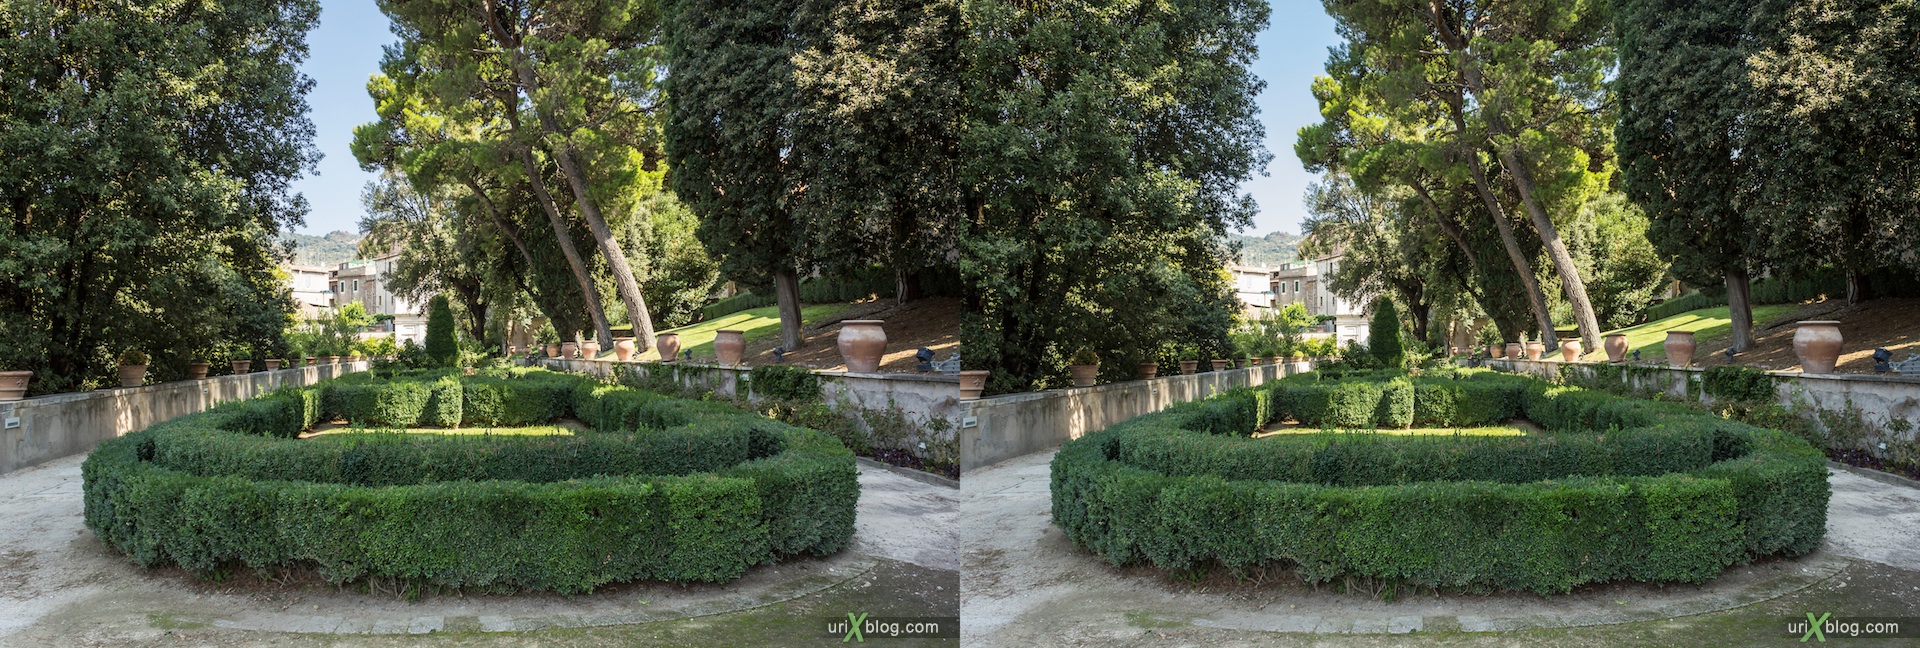 2012, villa D'Este, Italy, Tivoli, Rome, 3D, stereo pair, cross-eyed, crossview, cross view stereo pair